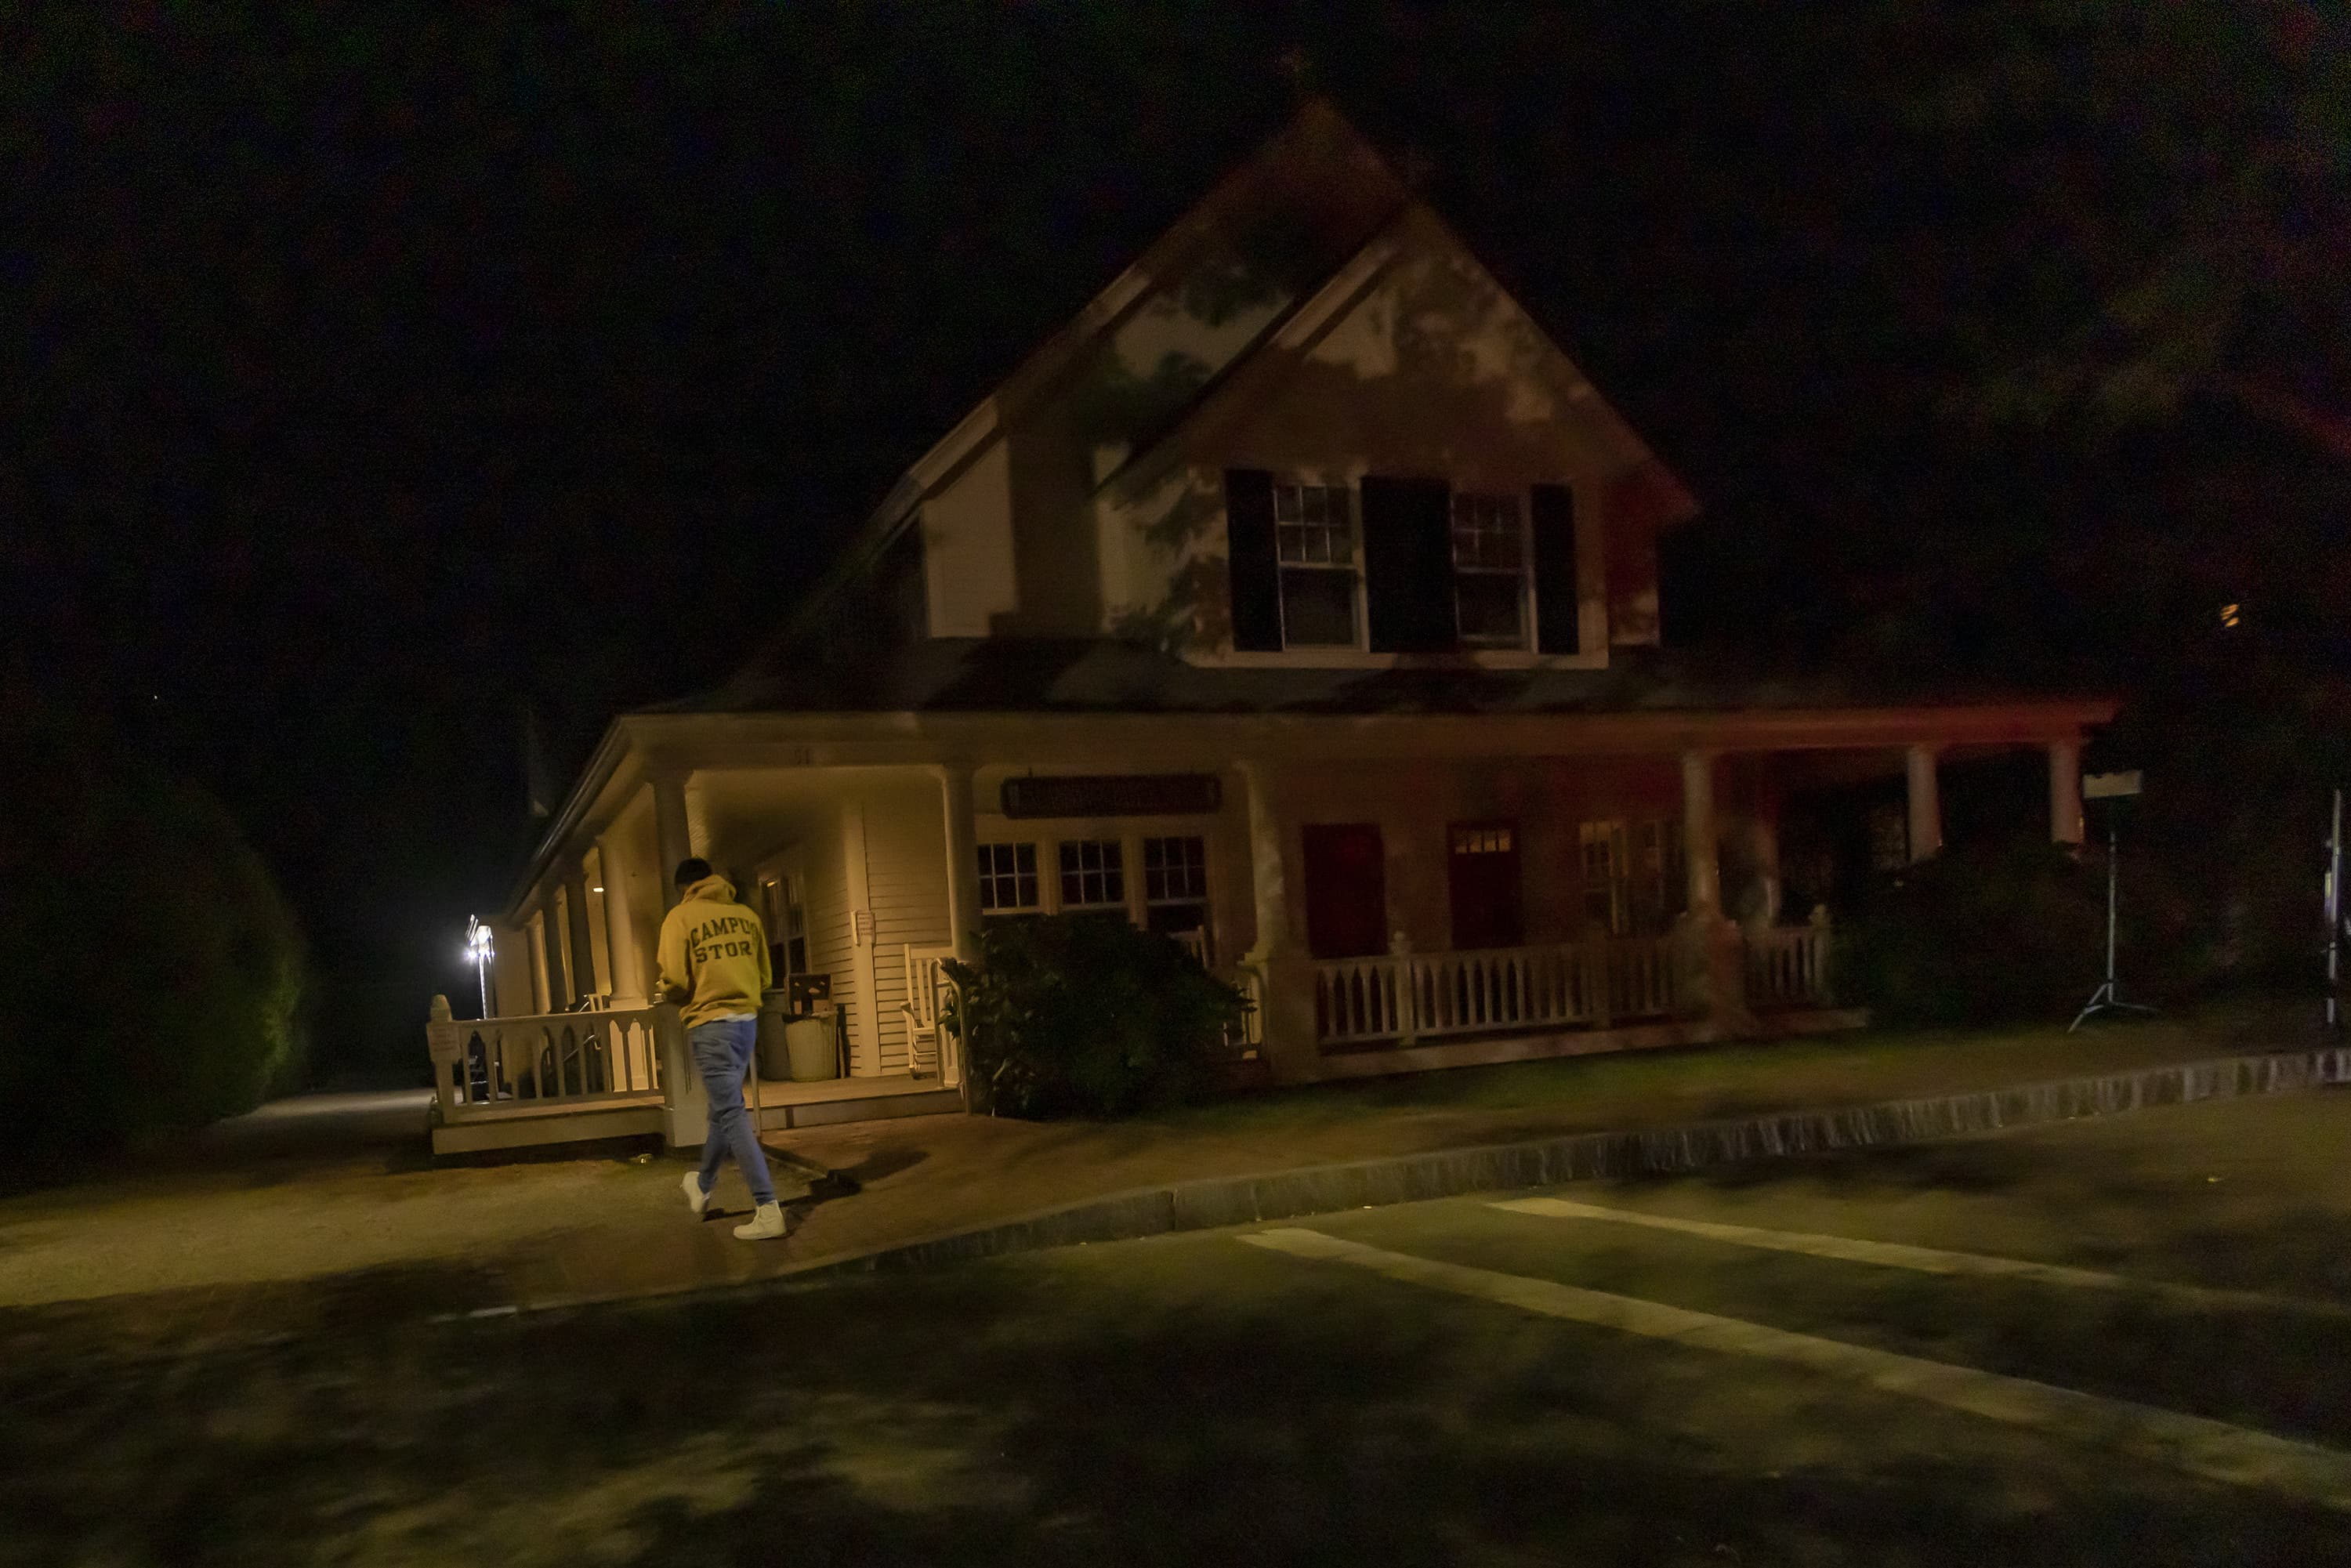 A migrant from Venezuela walks across Winter Street to St. Andrew’s Parish House in Edgartown. (Jesse Costa/WBUR)